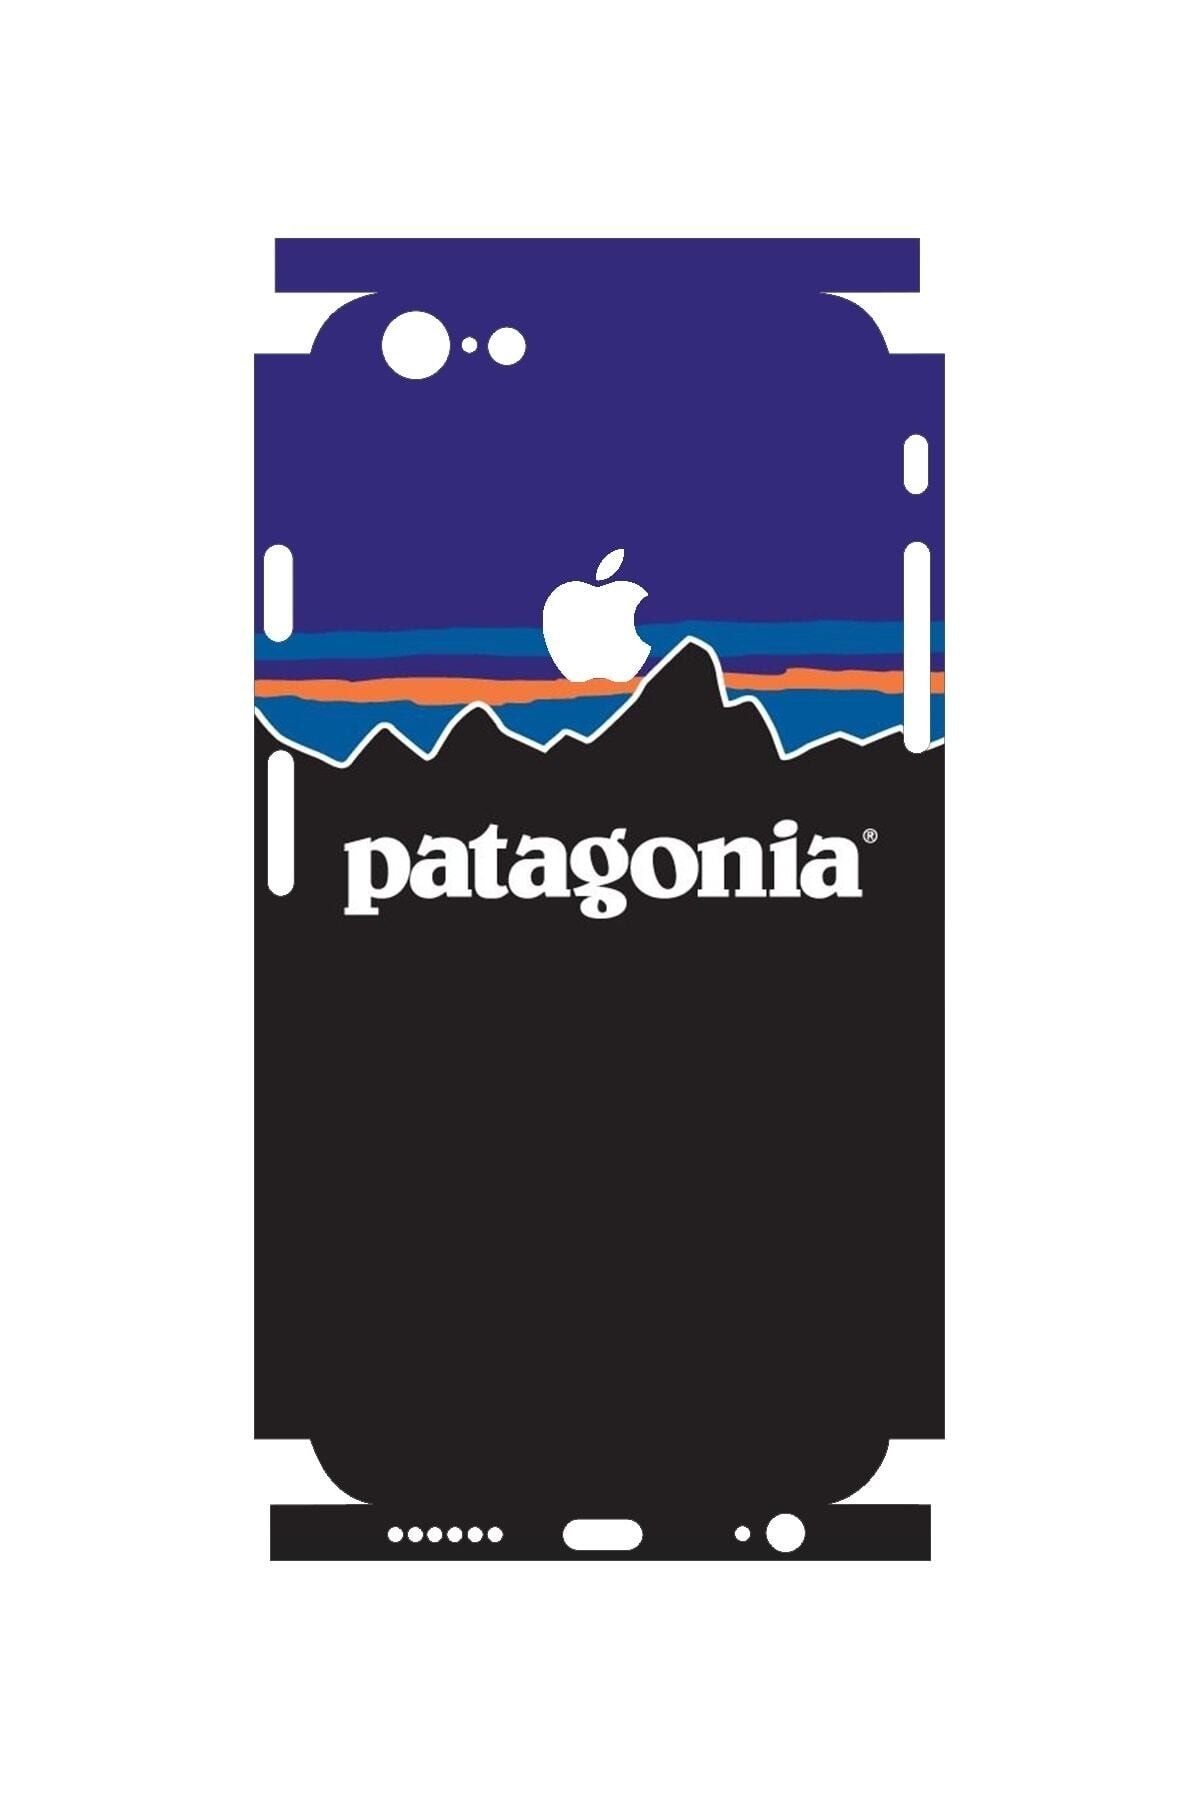 NANOSPACE Iphone 6 /6s Uyumlu Patagonia Telefon Kaplaması Full Cover 3m Sticker Kaplama